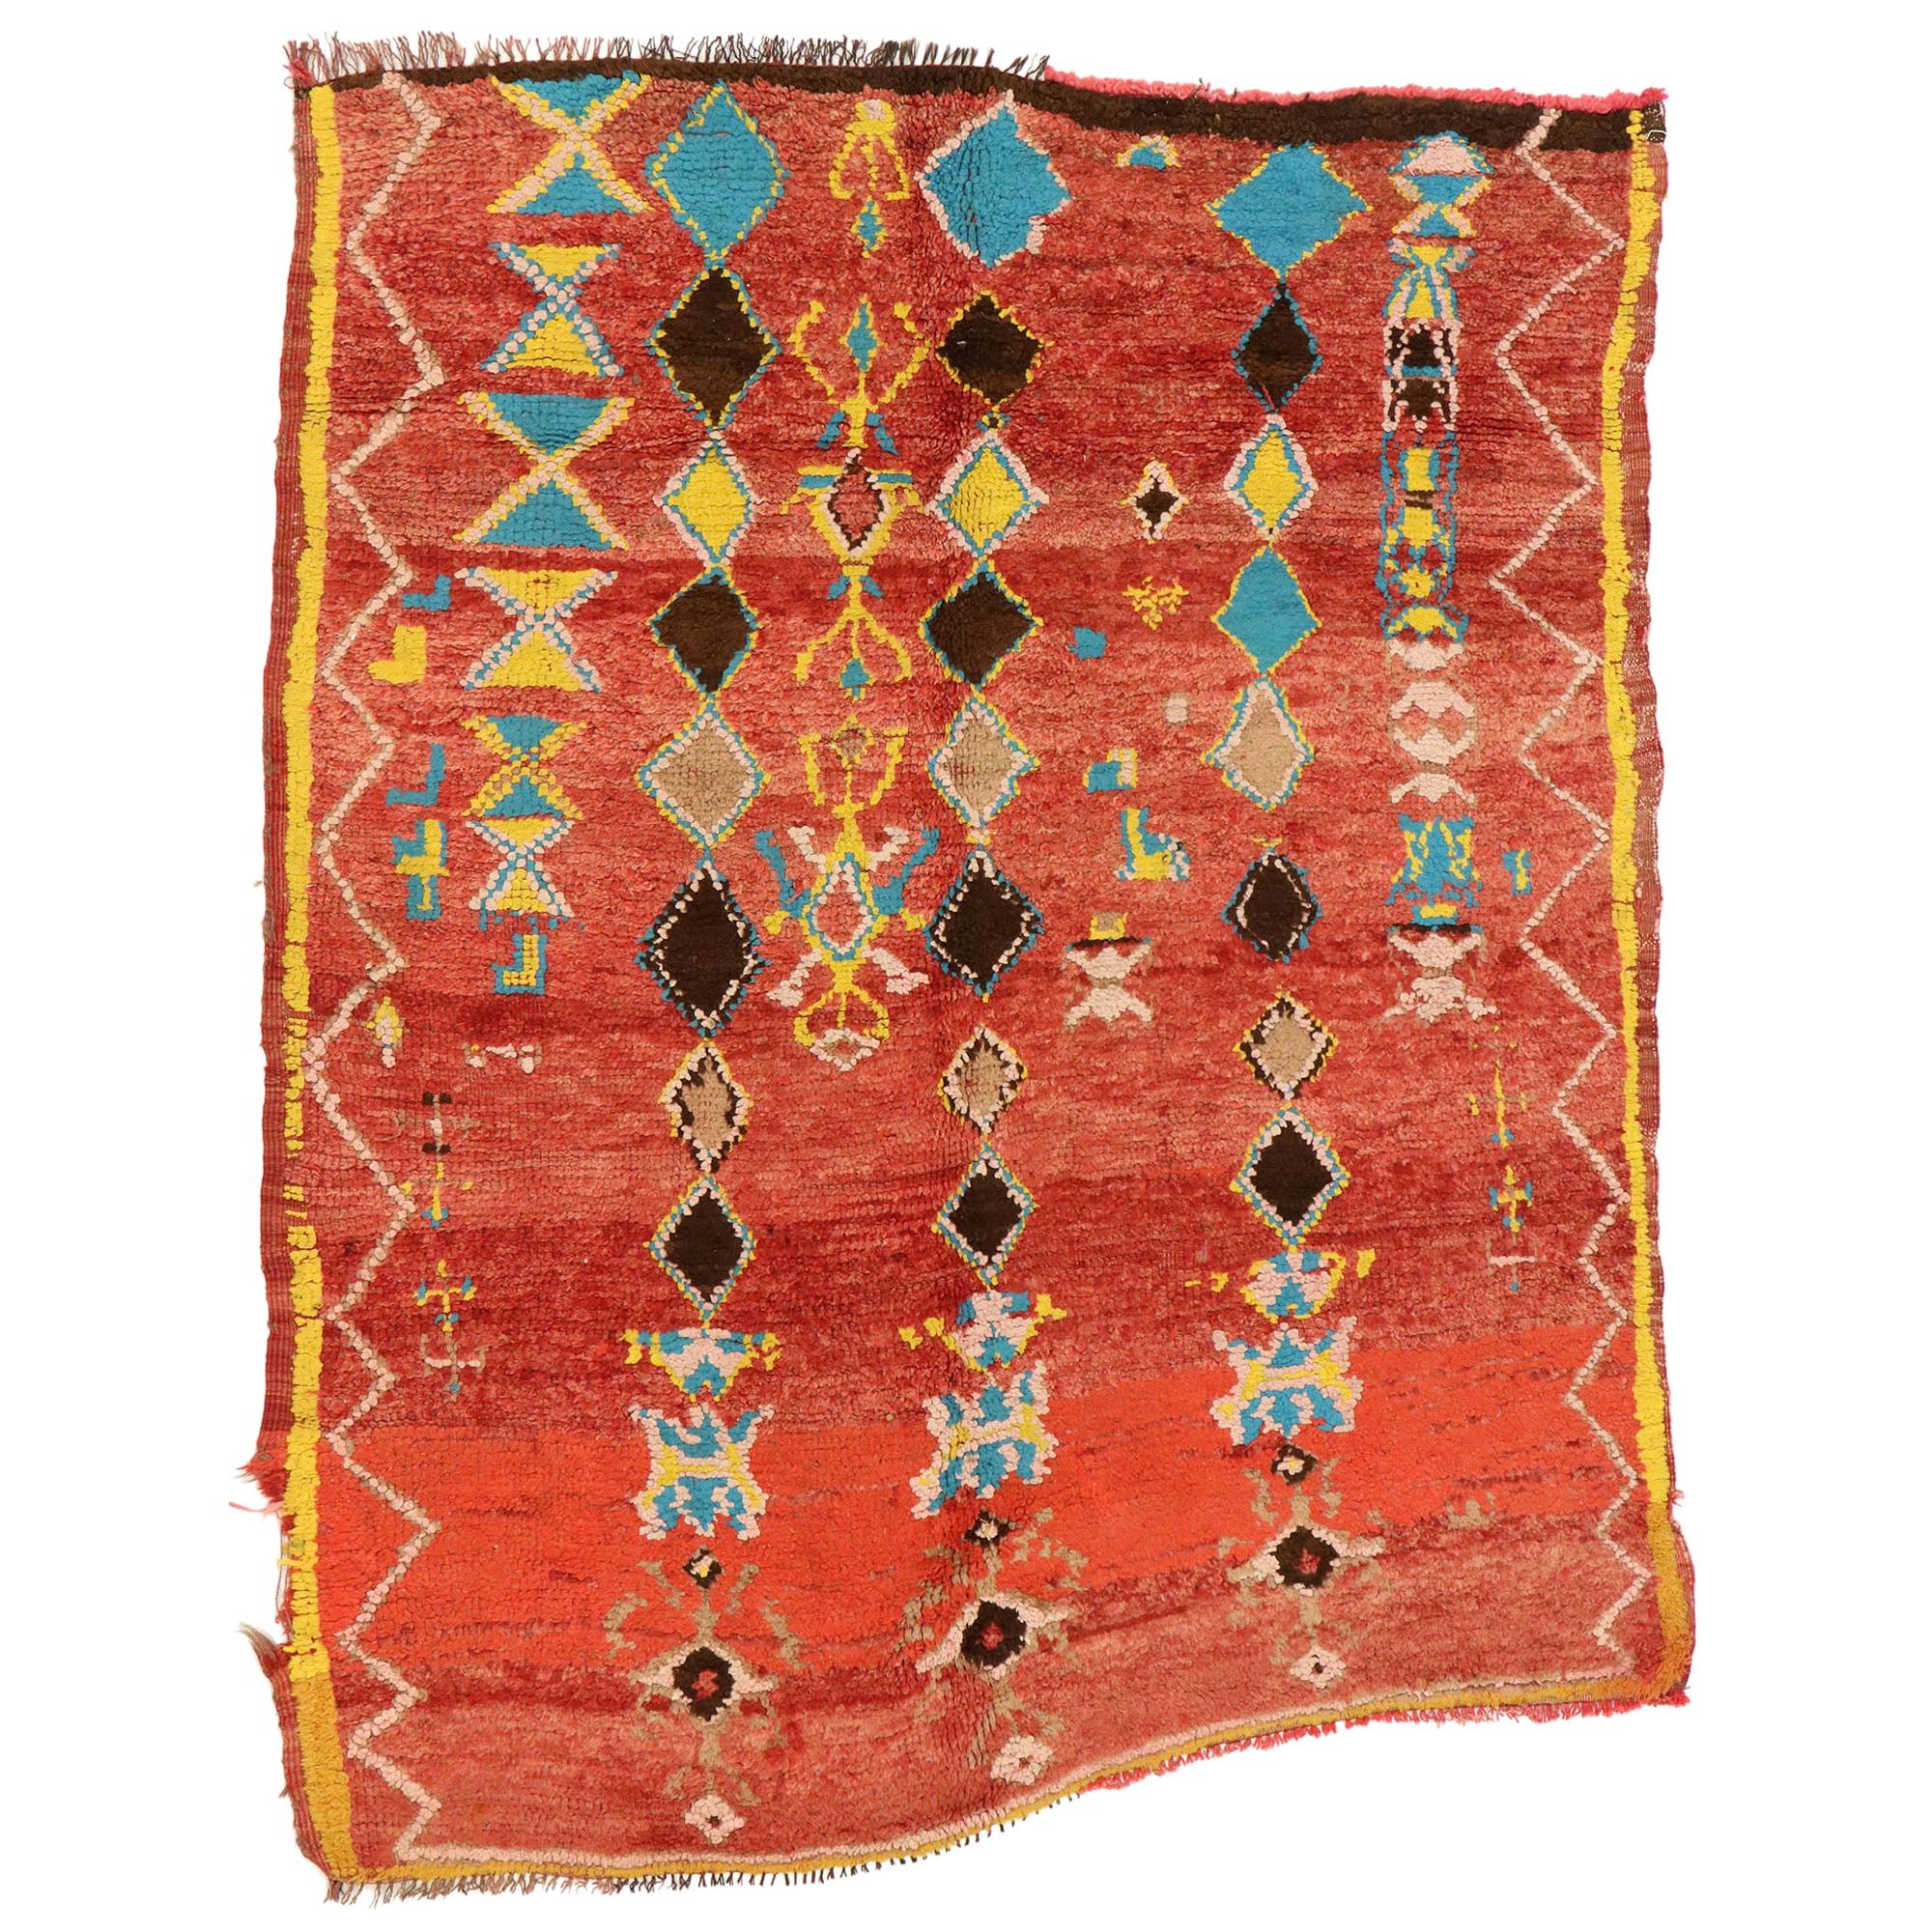 Vintage Berber Moroccan Rug with Postmodern Tribal Style